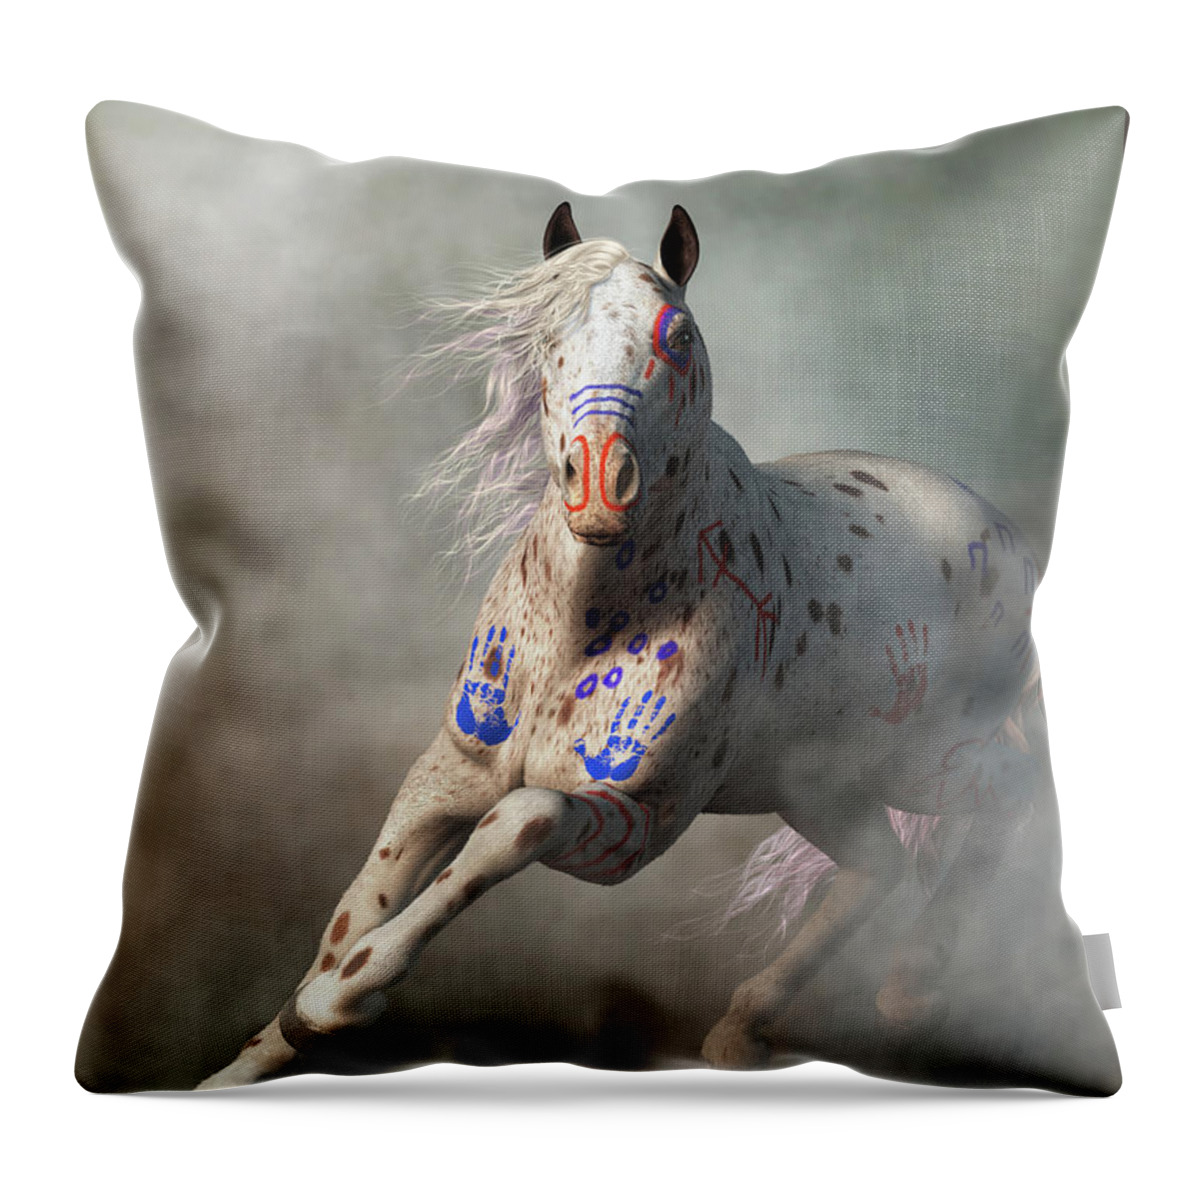 Appaloosa Warrior Horse Throw Pillow featuring the digital art Appaloosa Warrior Horse by Daniel Eskridge